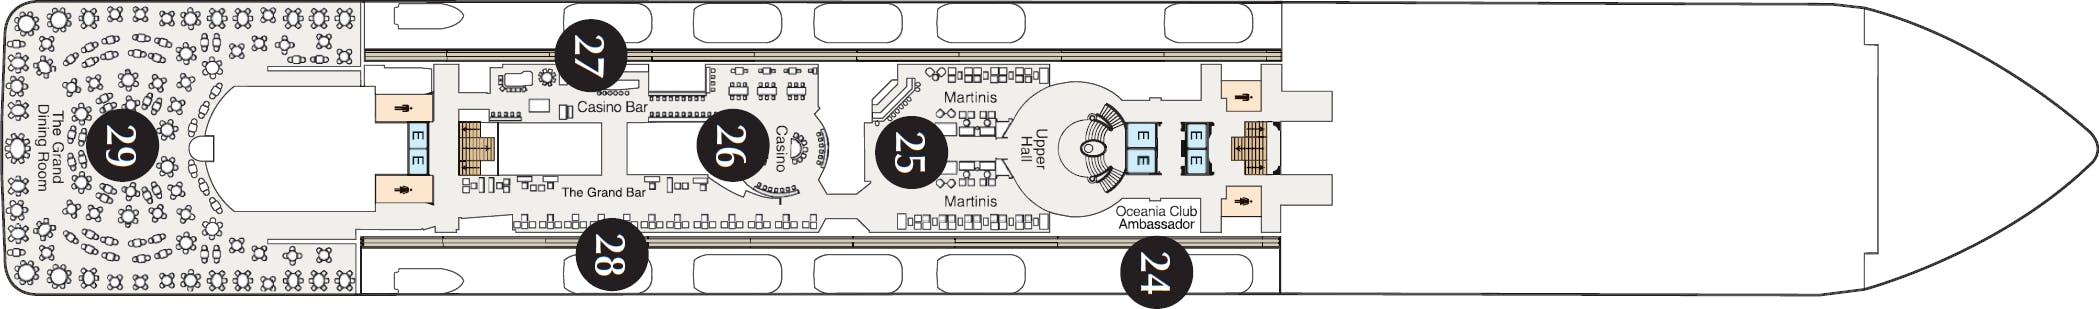 MS Marina - Oceania Cruises - Deck 6 (Deck 6)